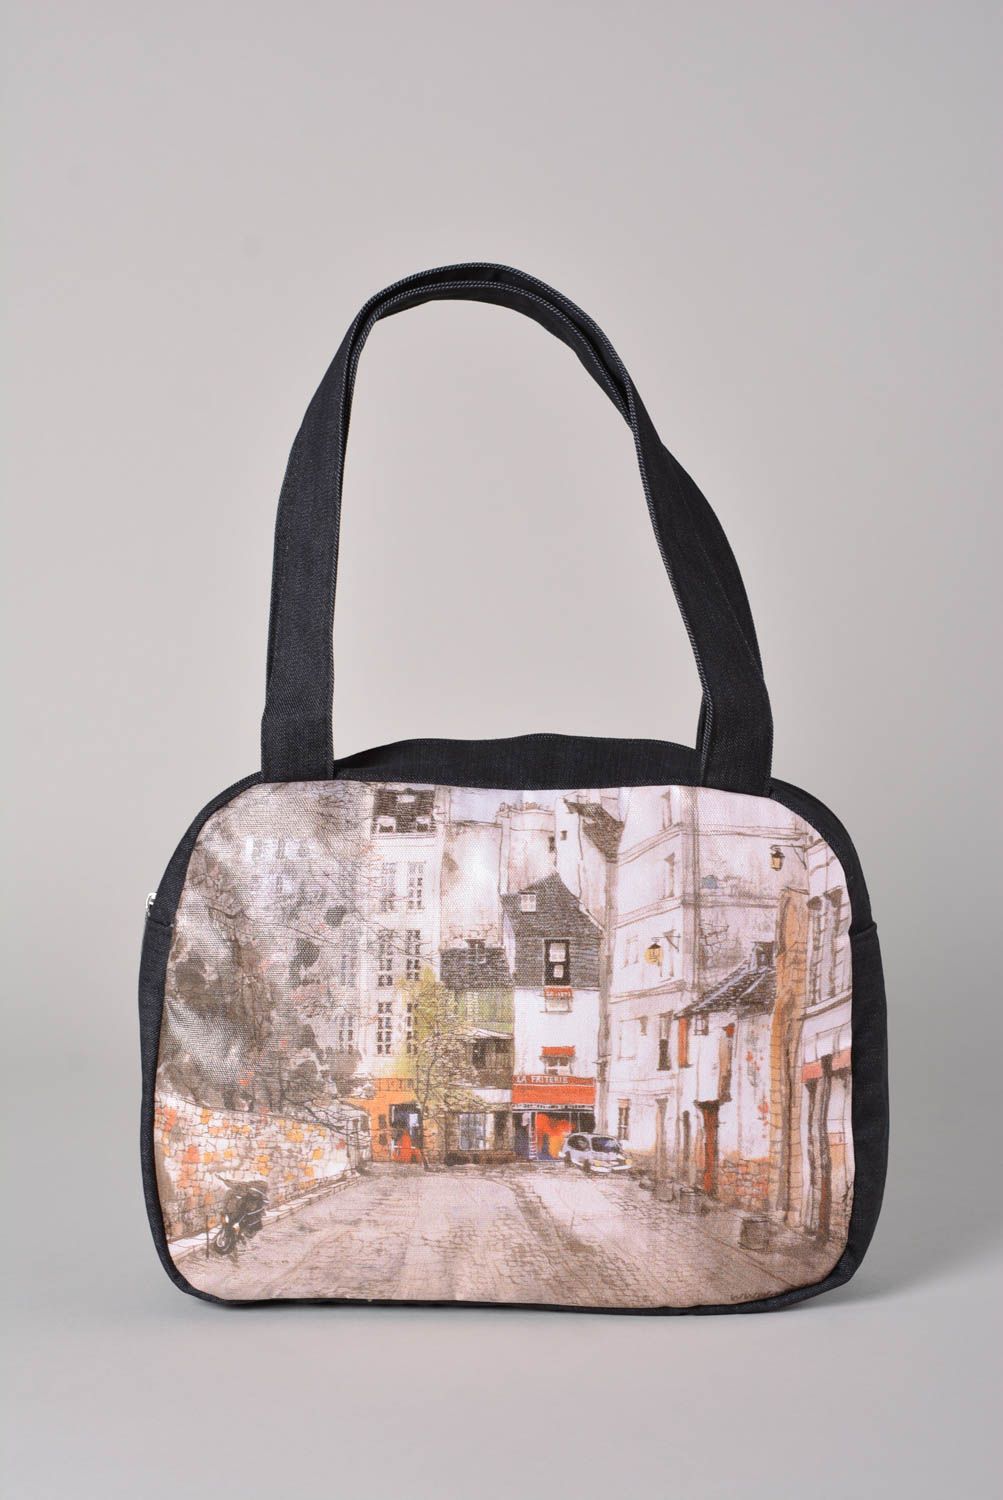 Small handmade fabric bag stylish handbag shoulder bag accessories for girls photo 1